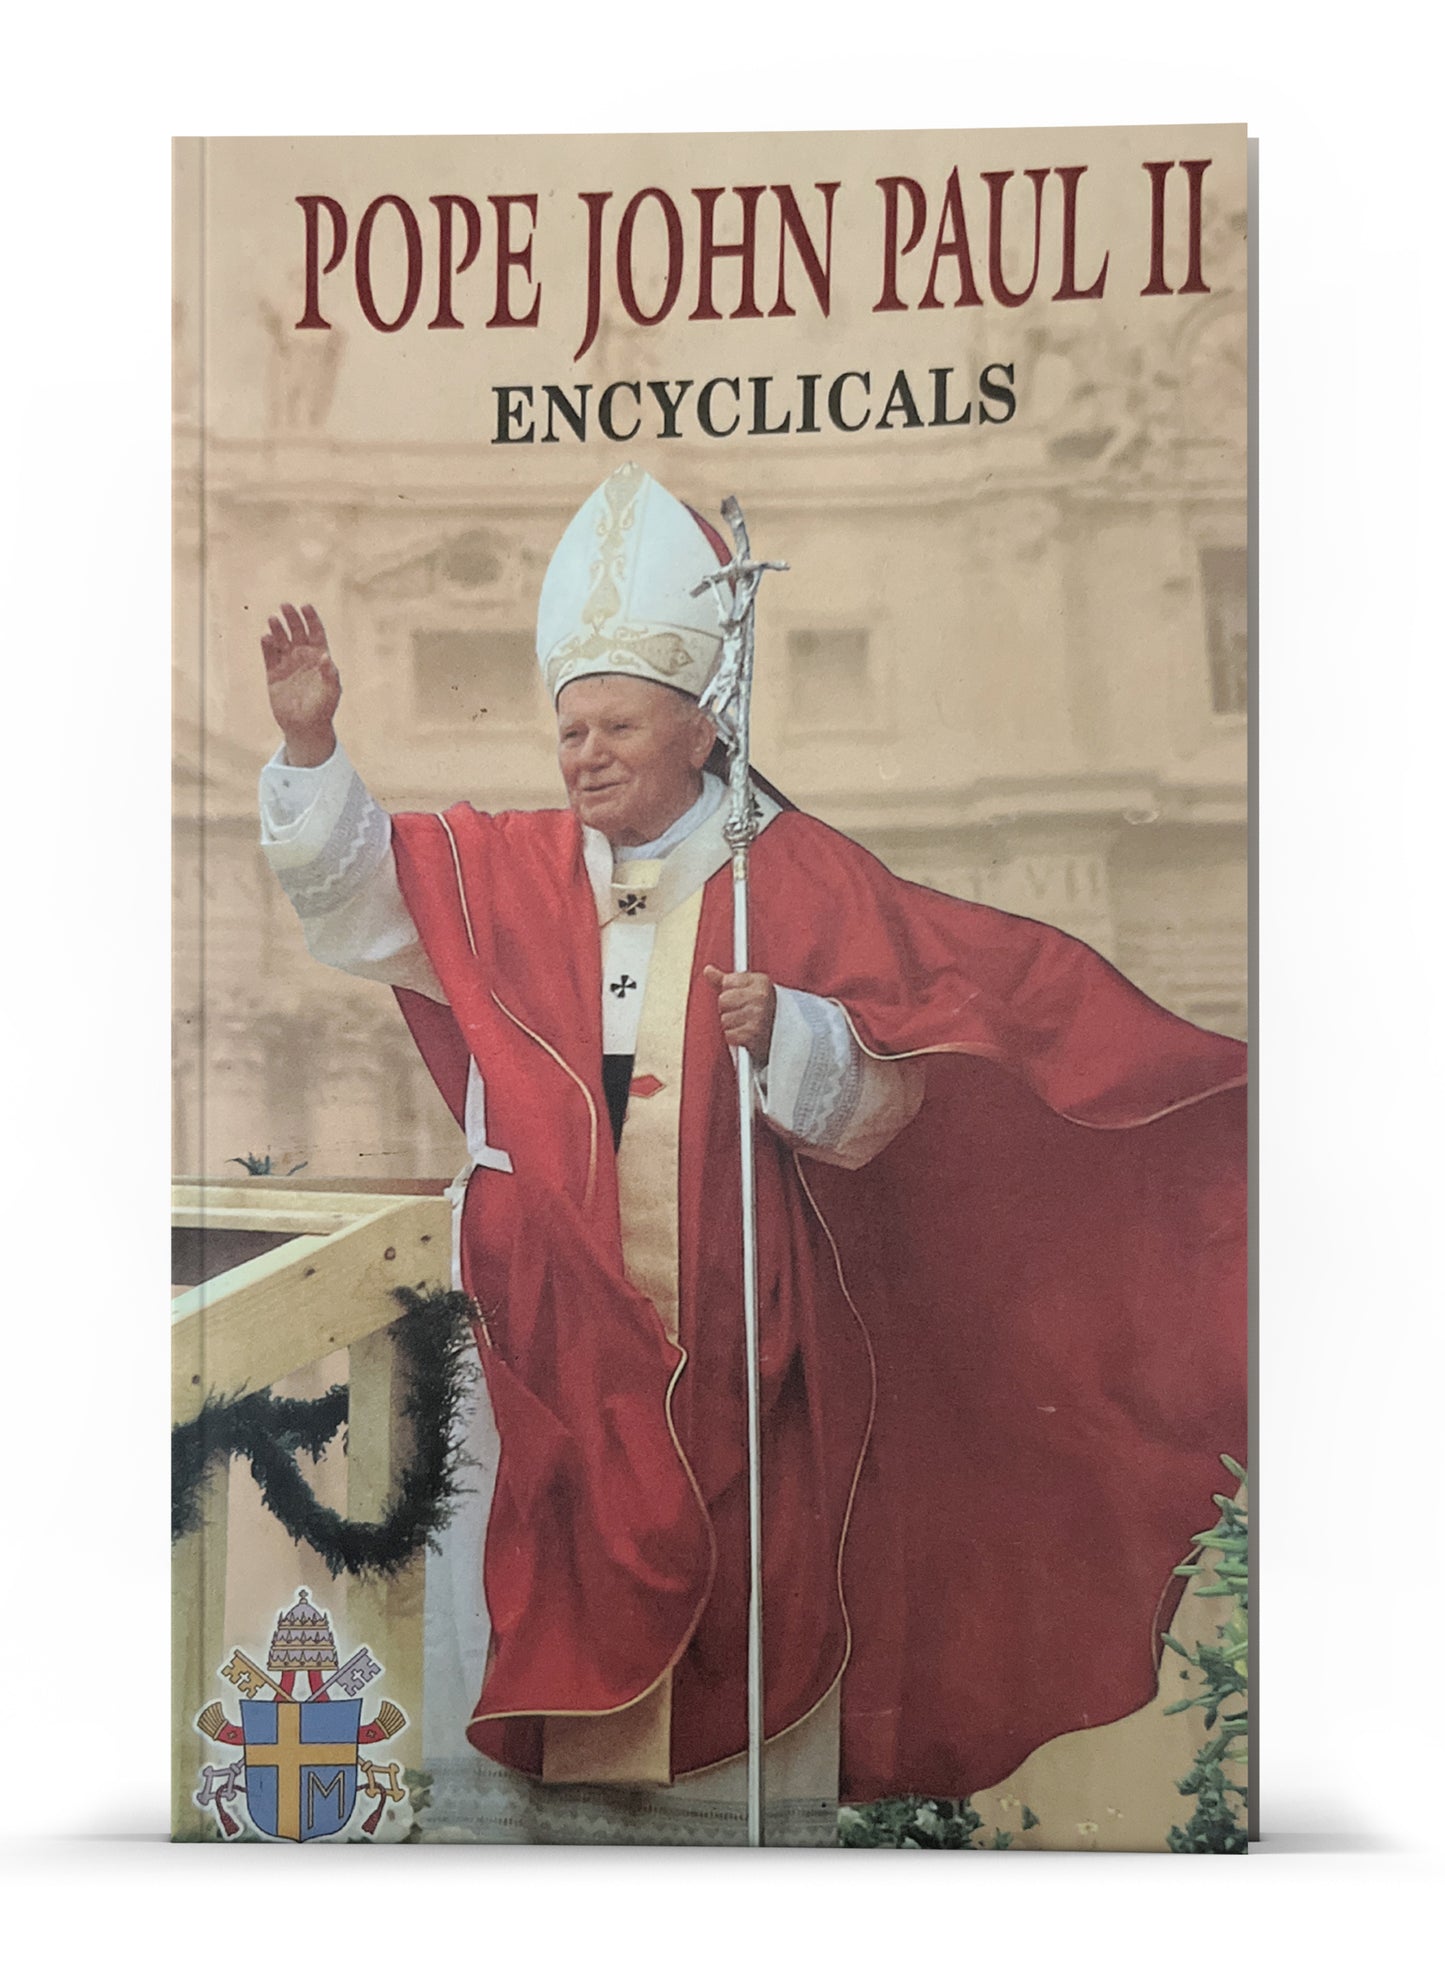 ENCYCLICALS POPE JOHN PAUL II